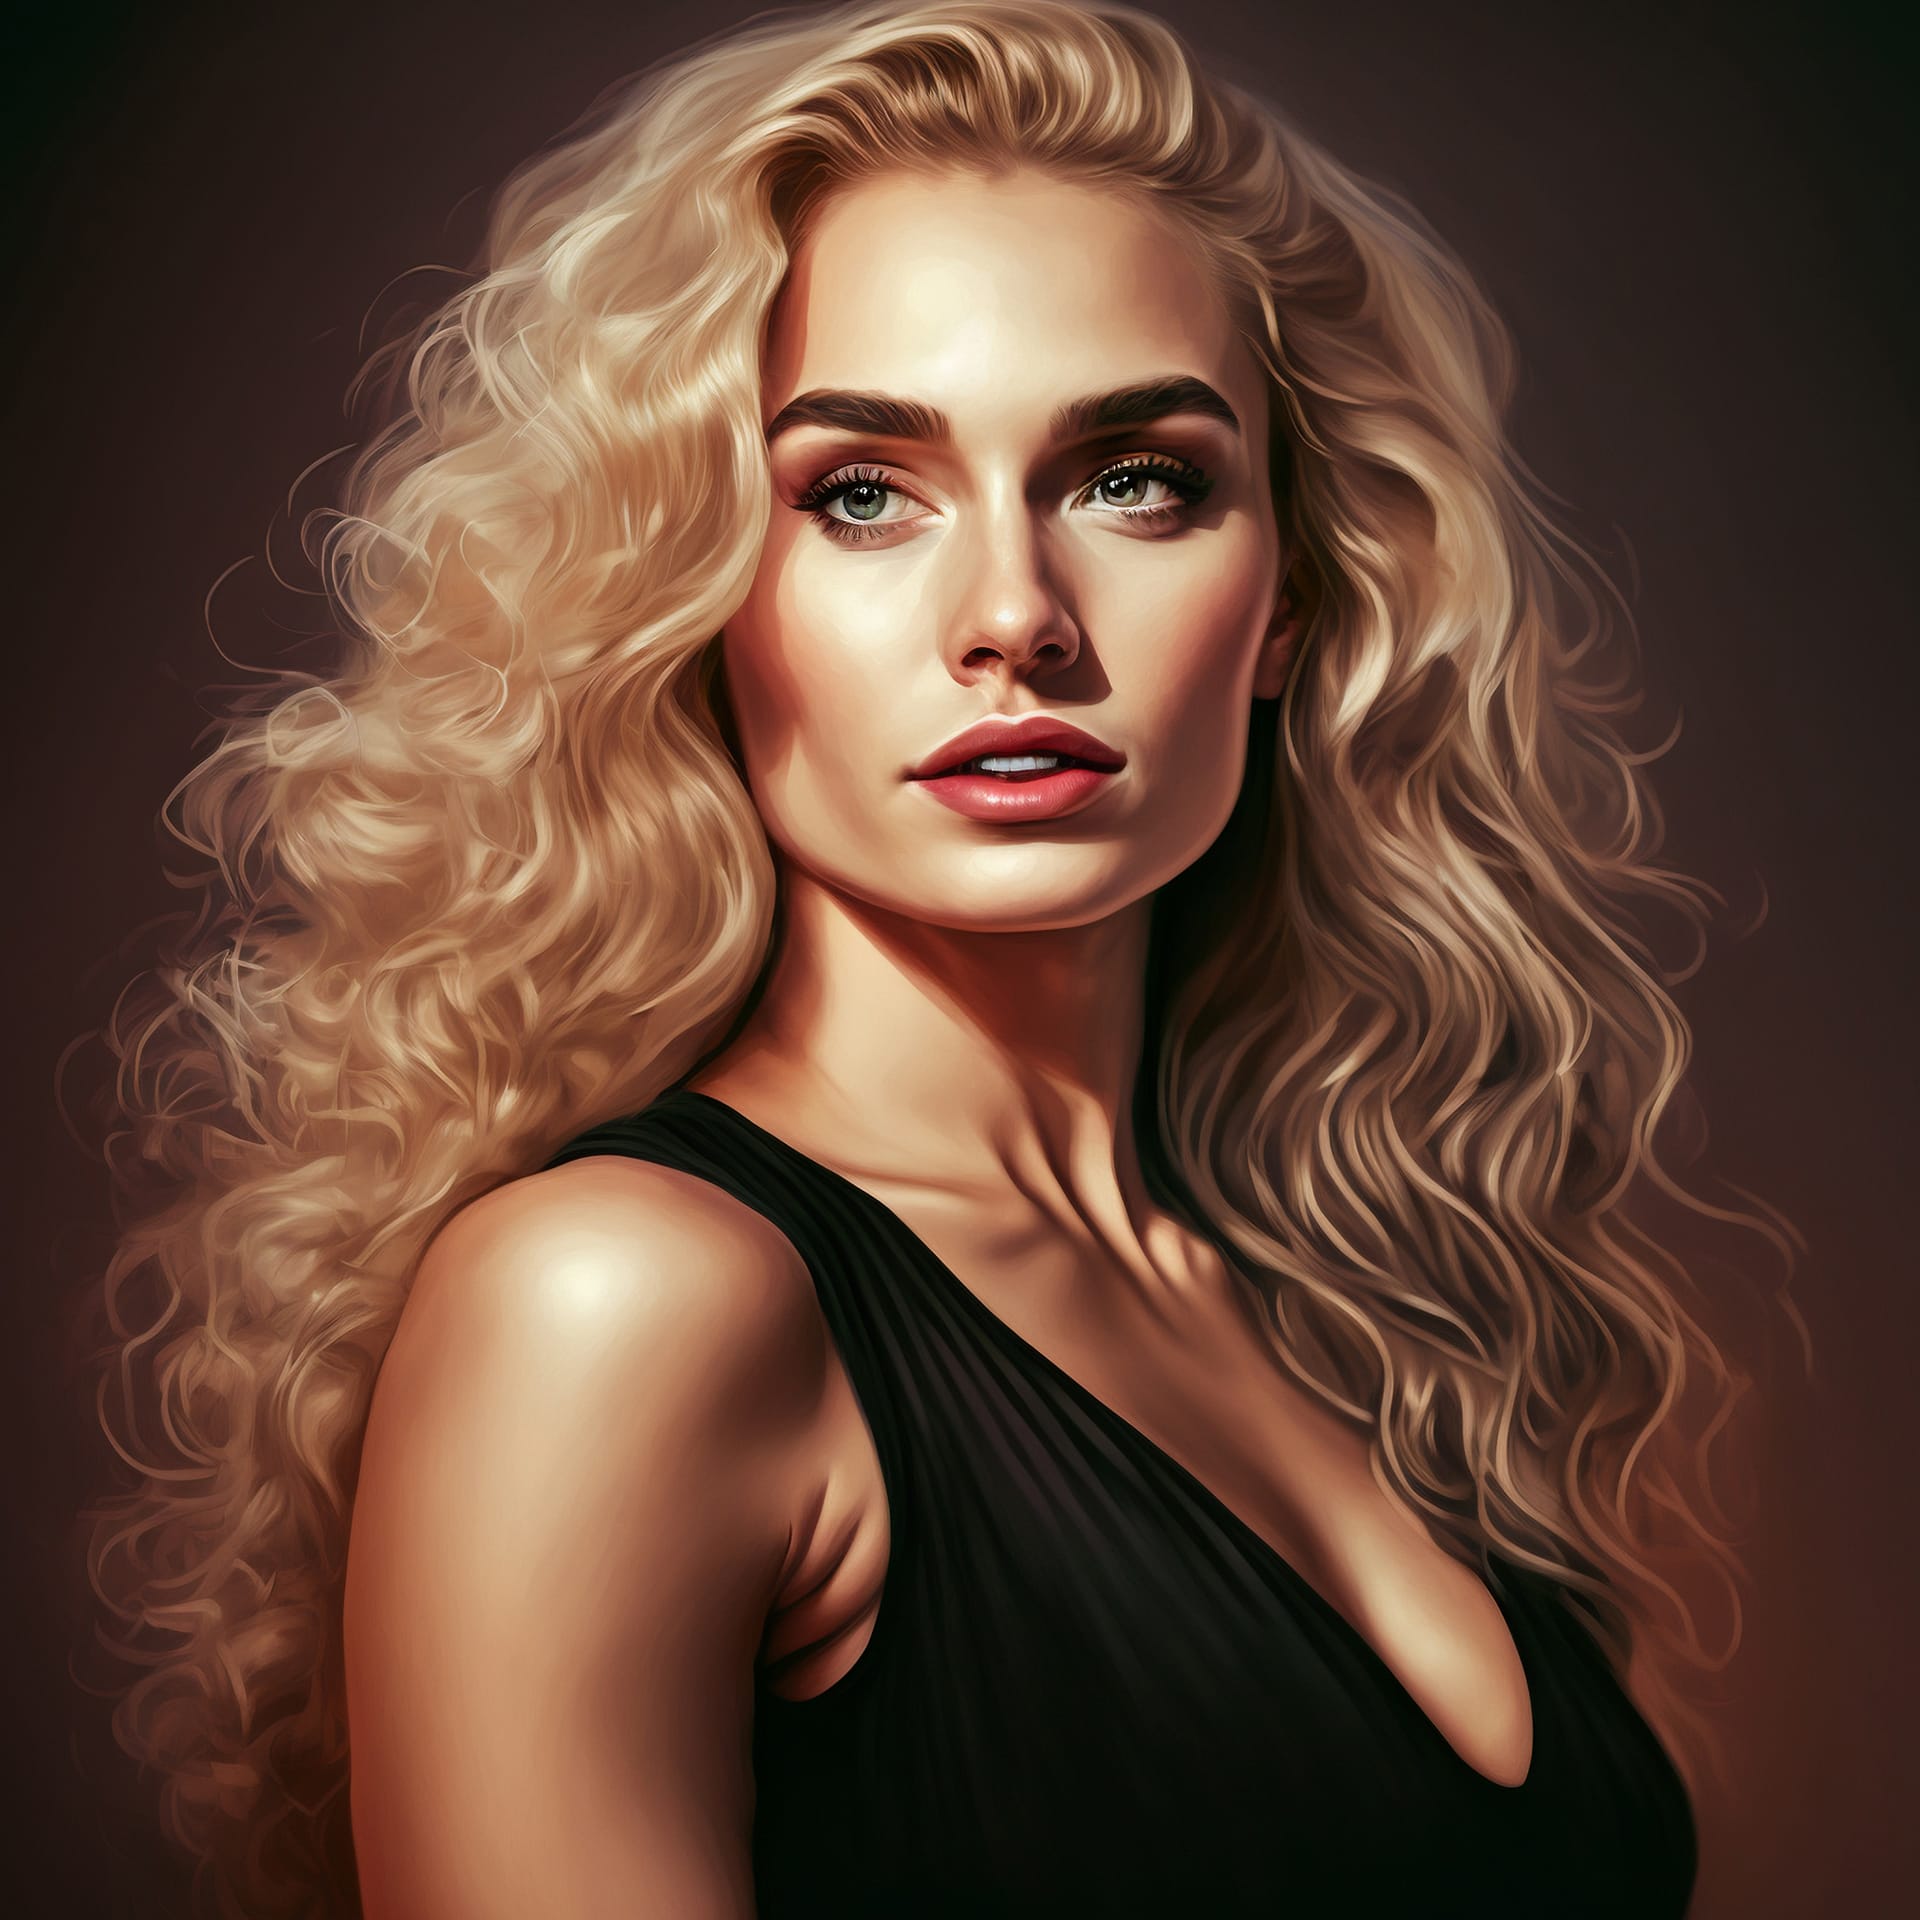 Digital portrait gorgeous elegant blonde woman creative digital painting